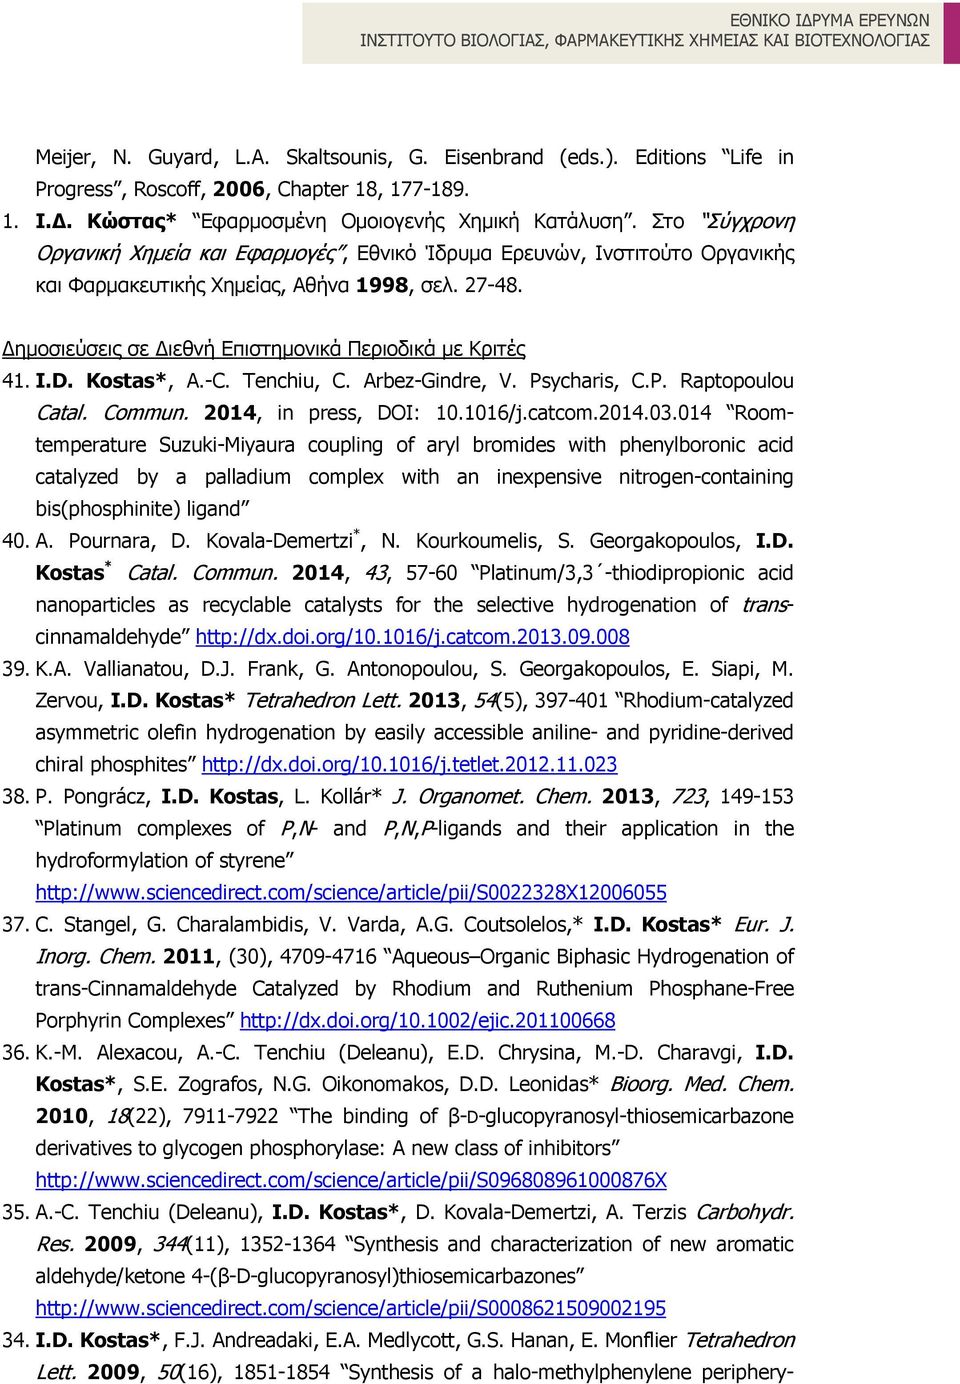 D. Kostas*, A.-C. Tenchiu, C. Arbez-Gindre, V. Psycharis, C.P. Raptopoulou Catal. Commun. 2014, in press, DOI: 10.1016/j.catcom.2014.03.